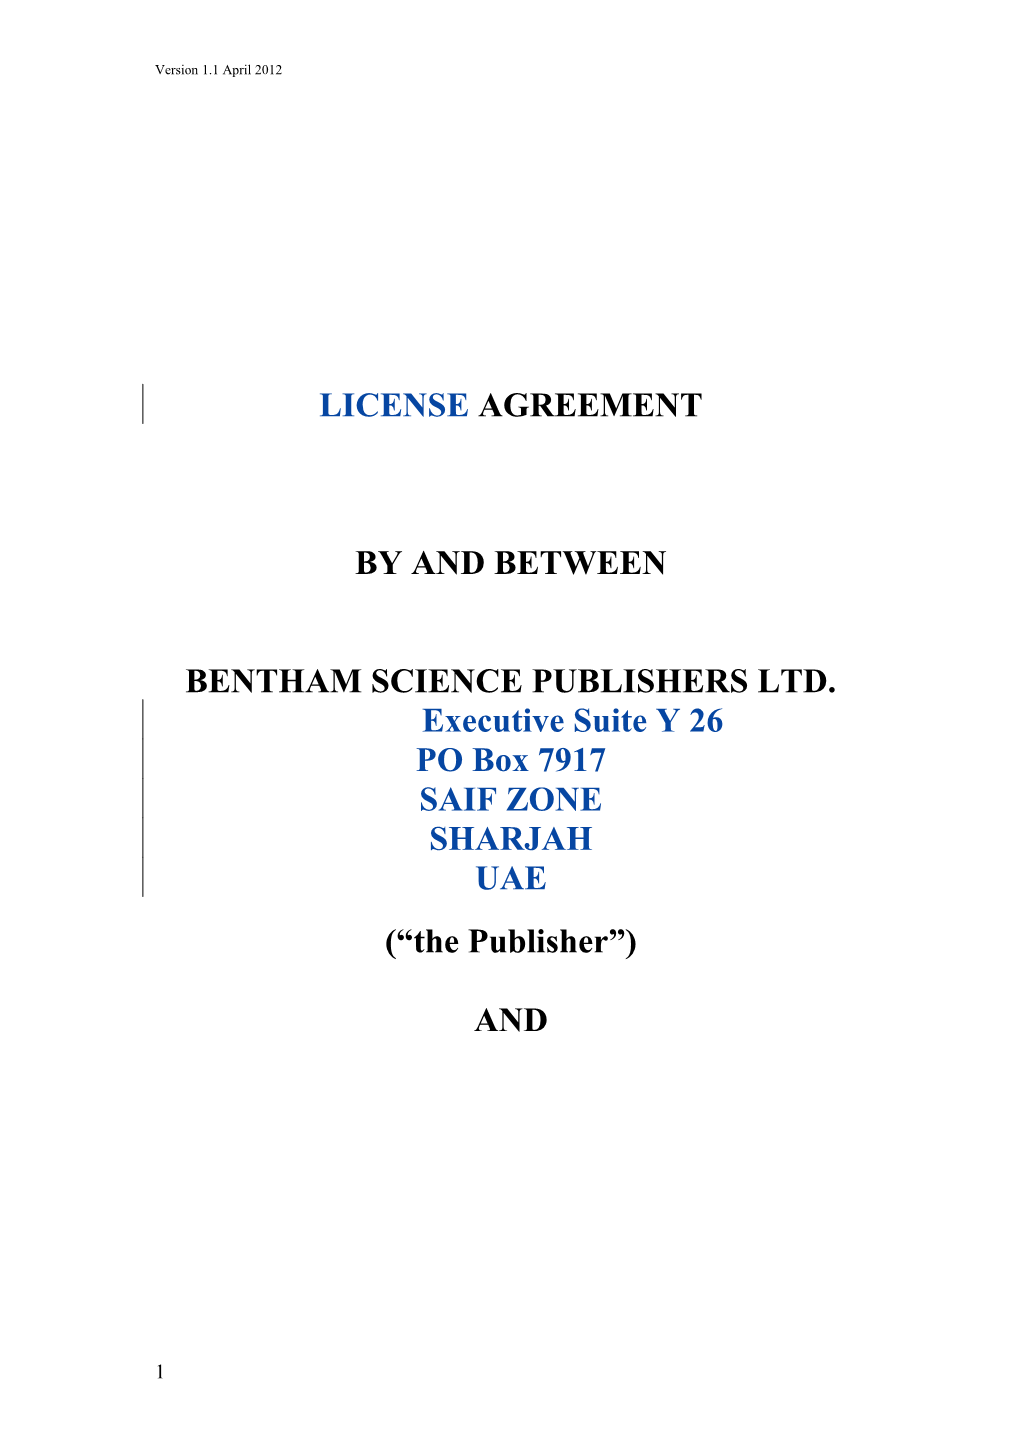 Bentham Science Publishers Ltd